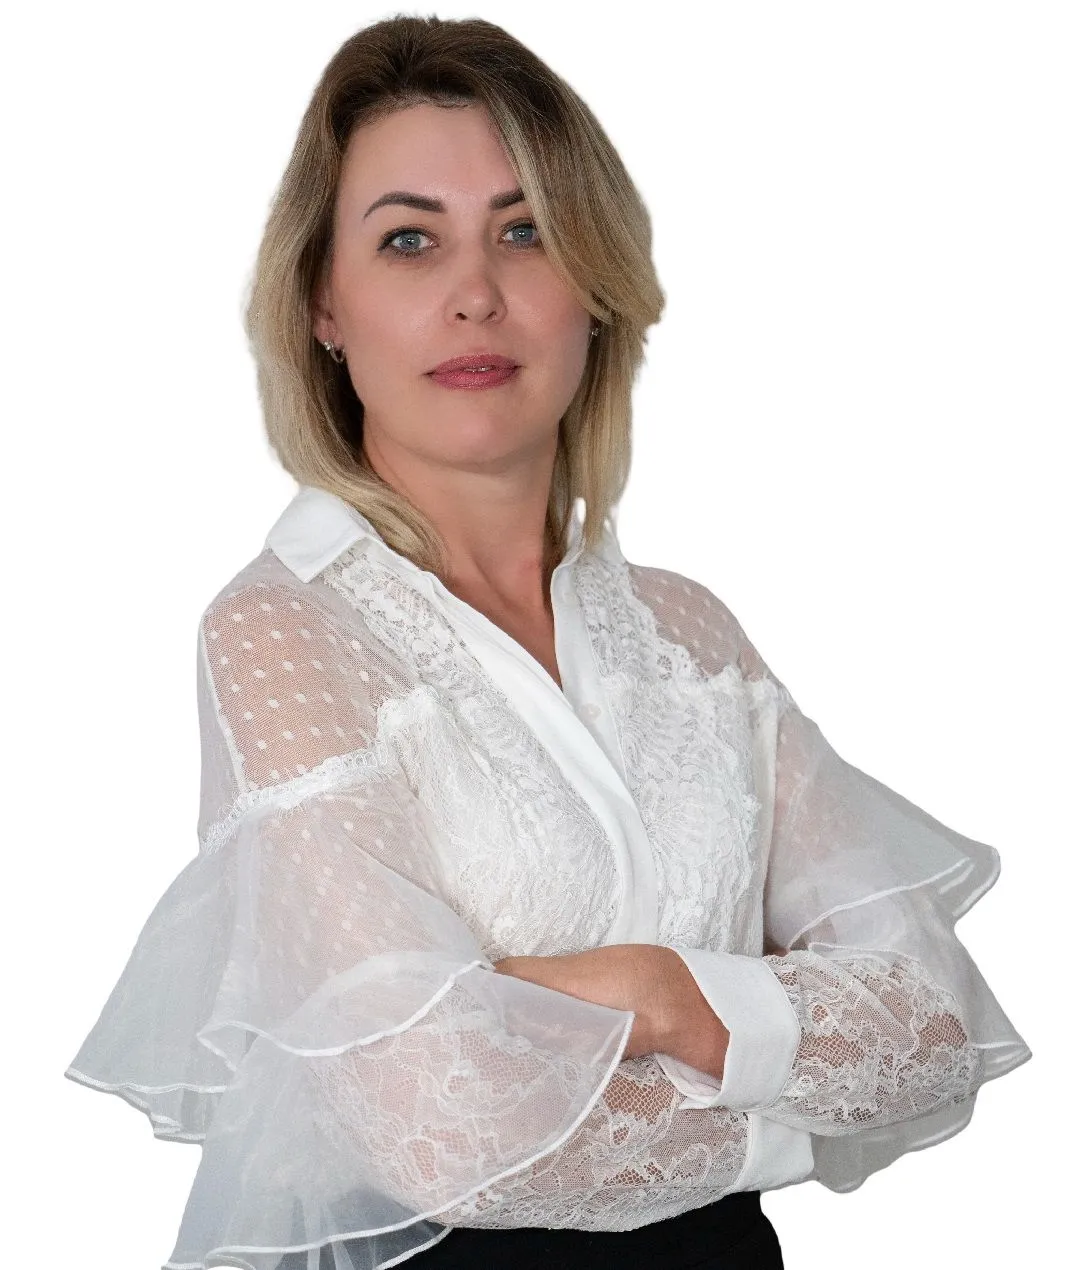 Nadezhda Osokina